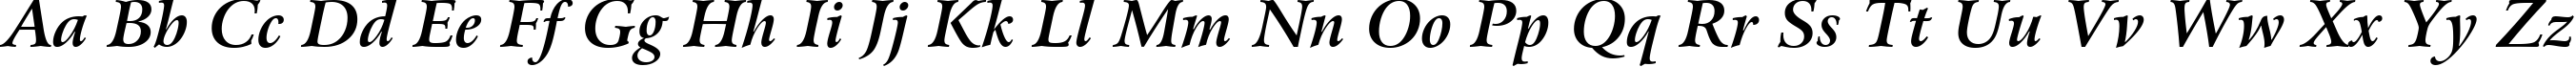 Пример написания английского алфавита шрифтом Bitstream Arrus Bold Italic BT